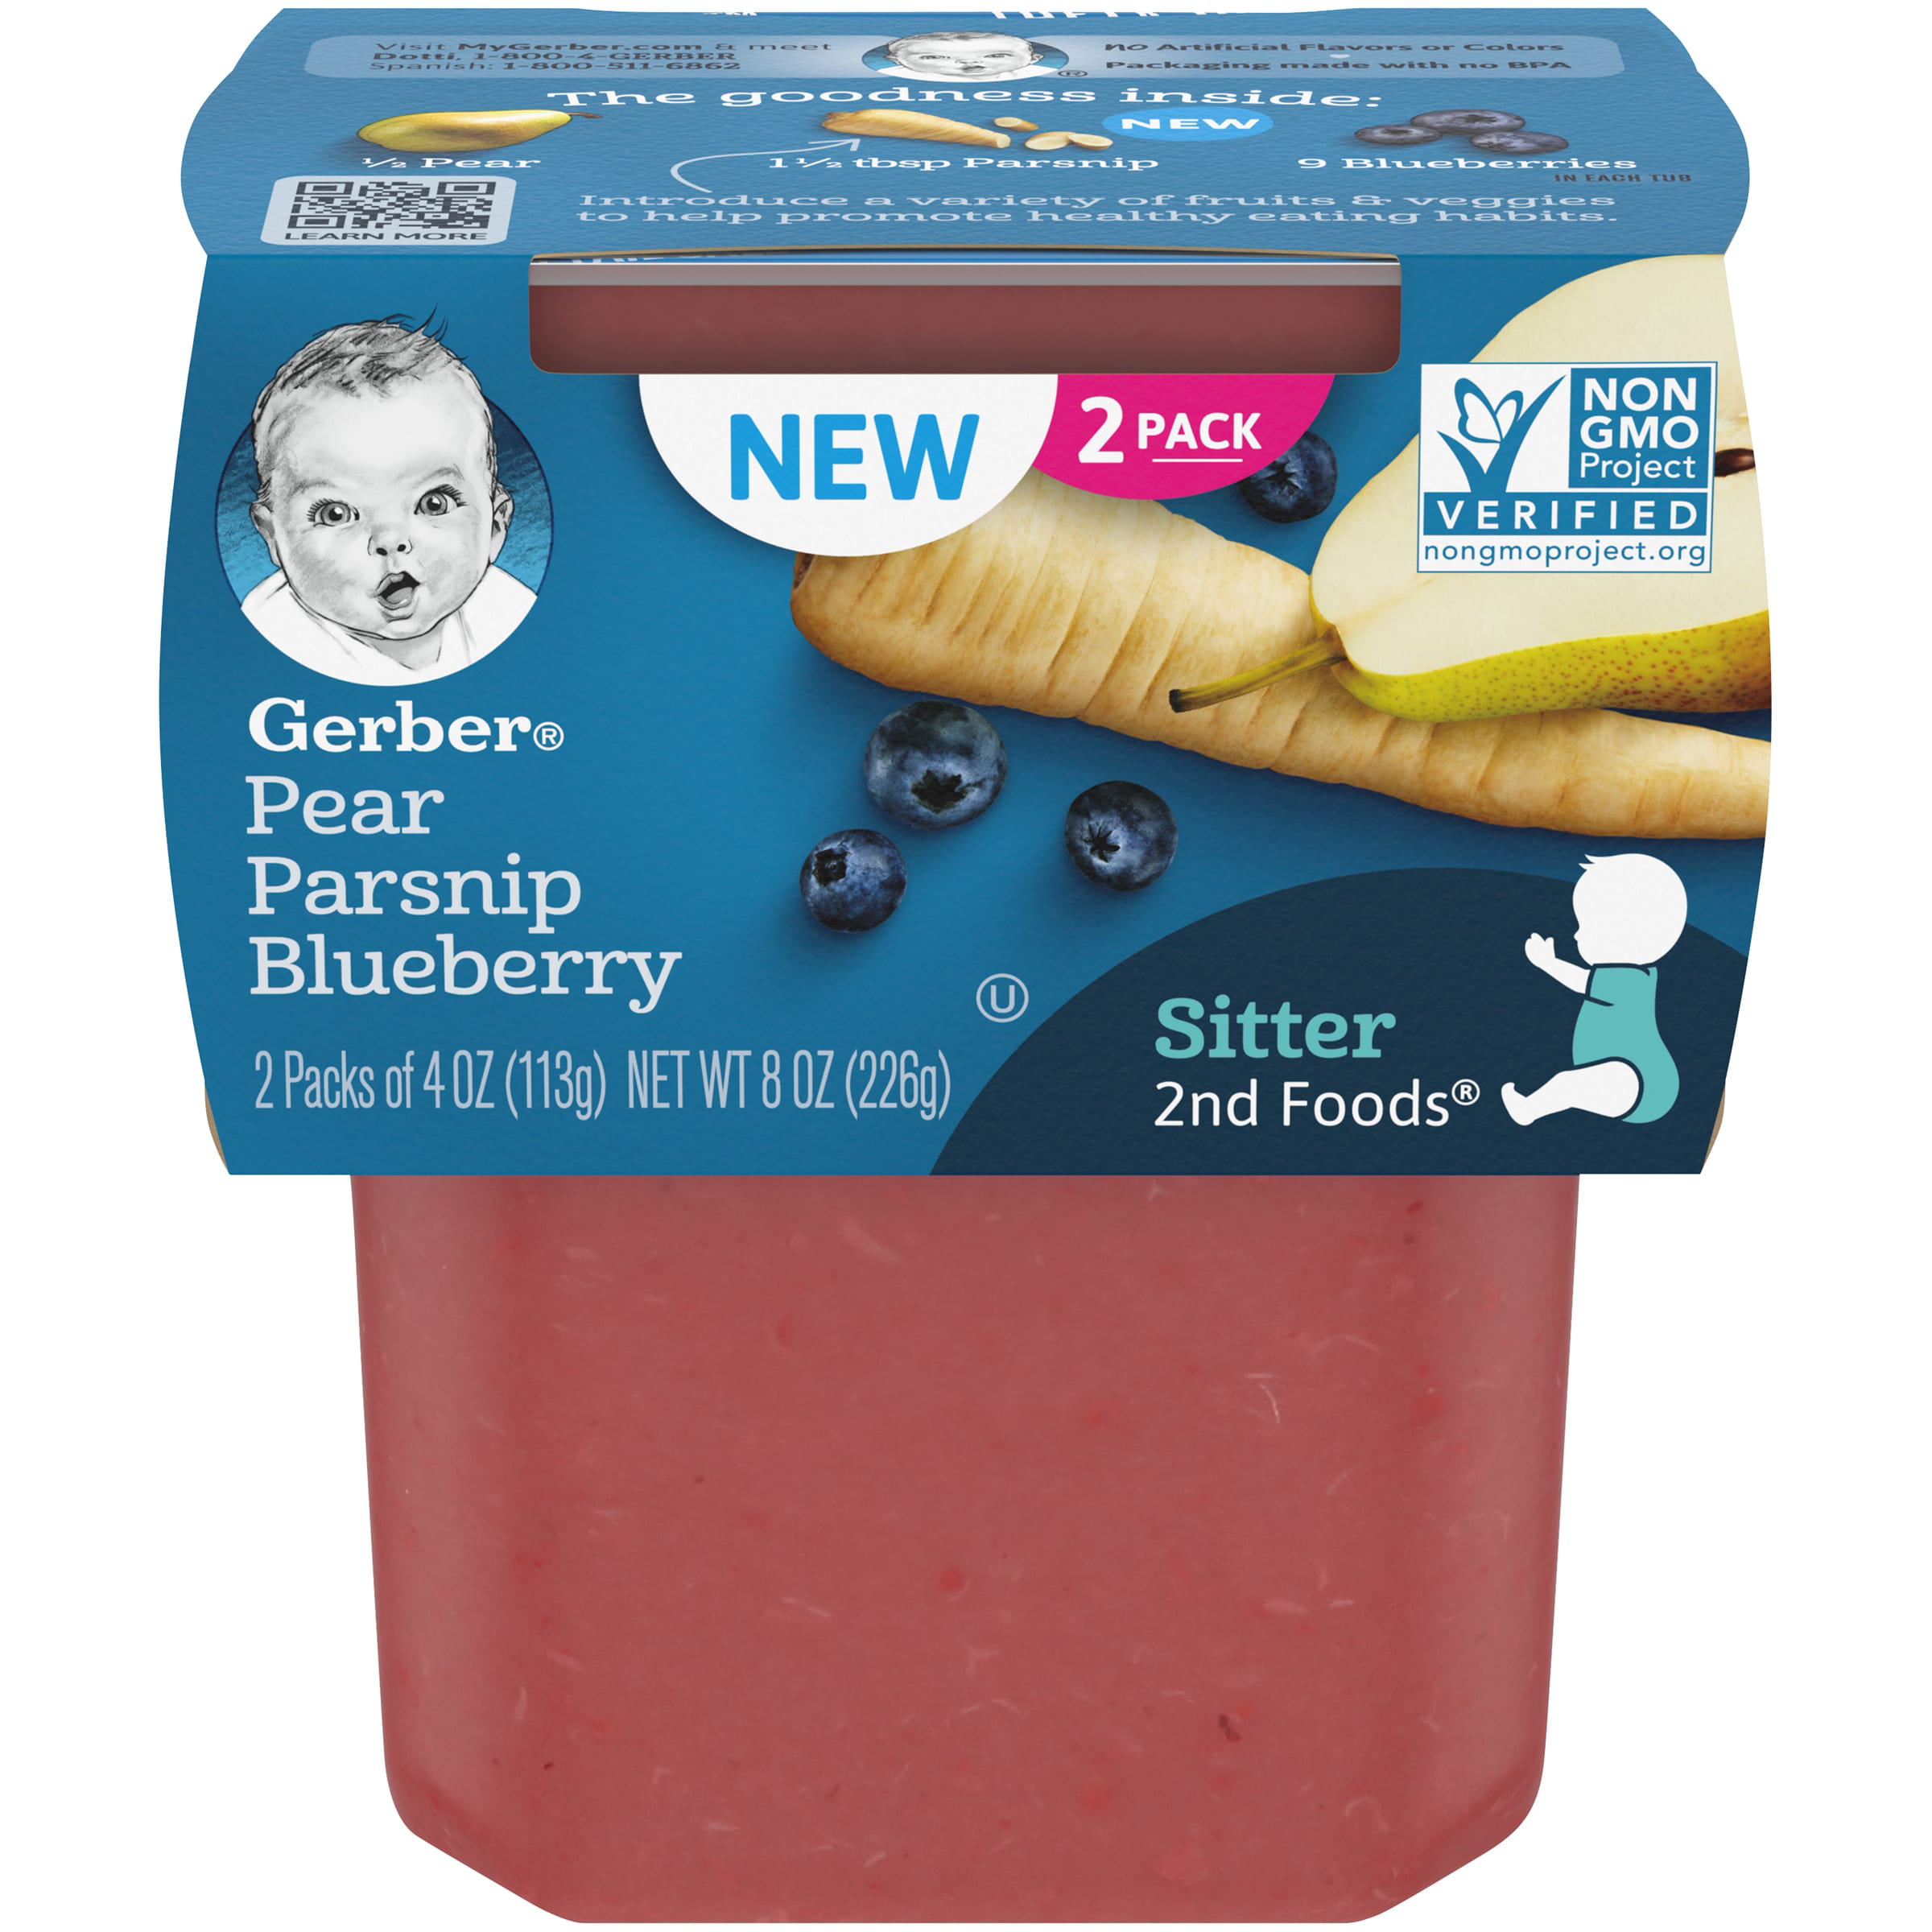 Gerber Stage 2 Baby Food, Pear Parsnip Blueberry, 4 oz Tubs (16 Pack)